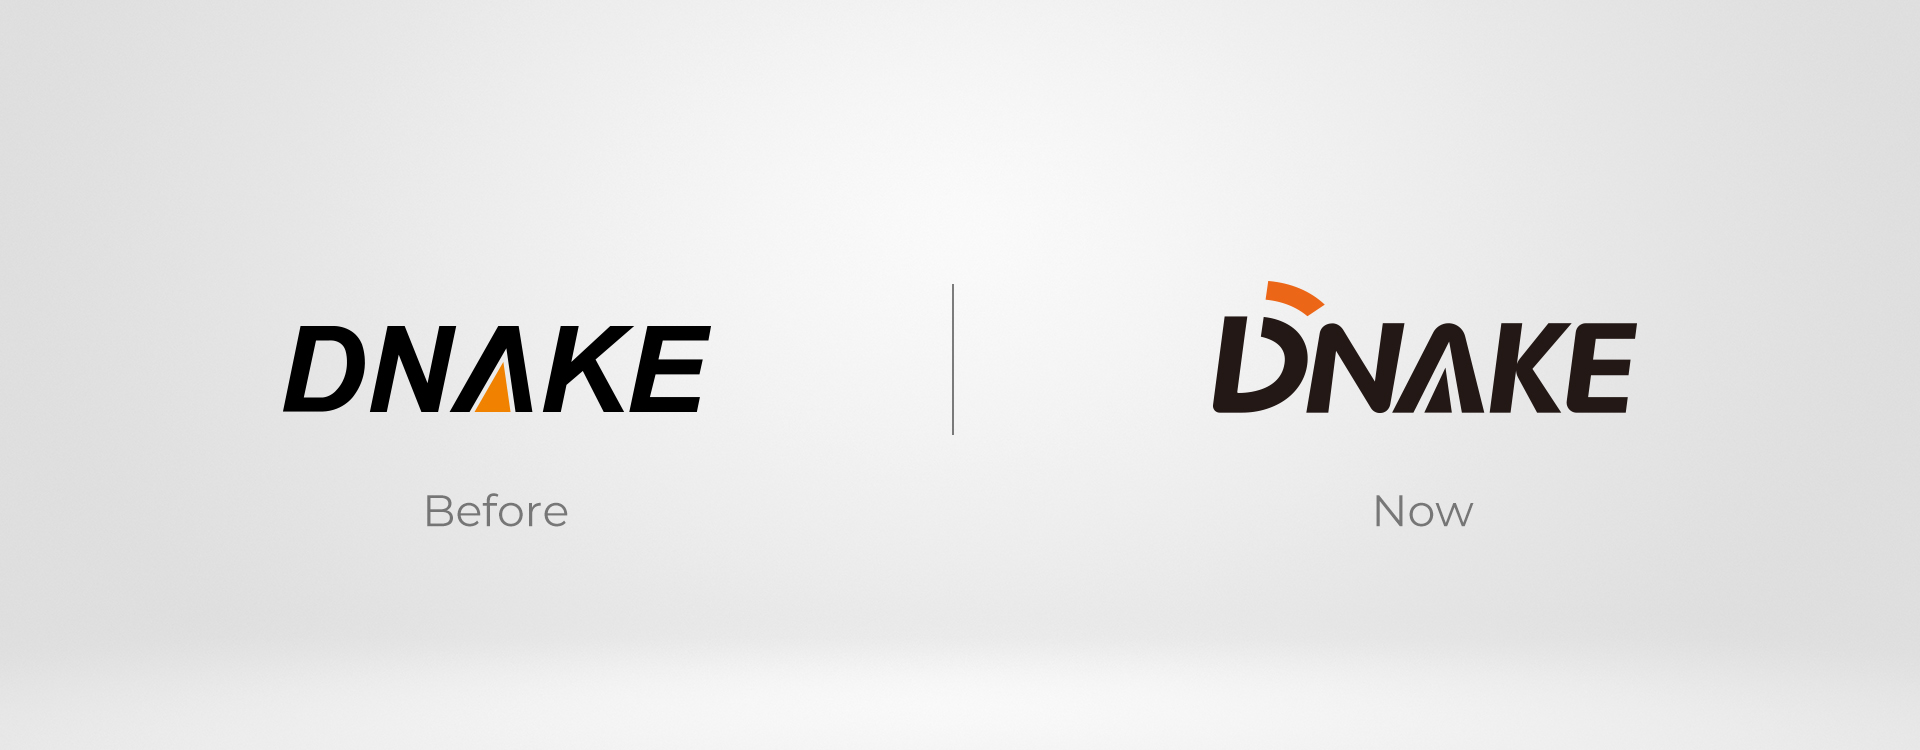 DNAKE New Logo Comparaison